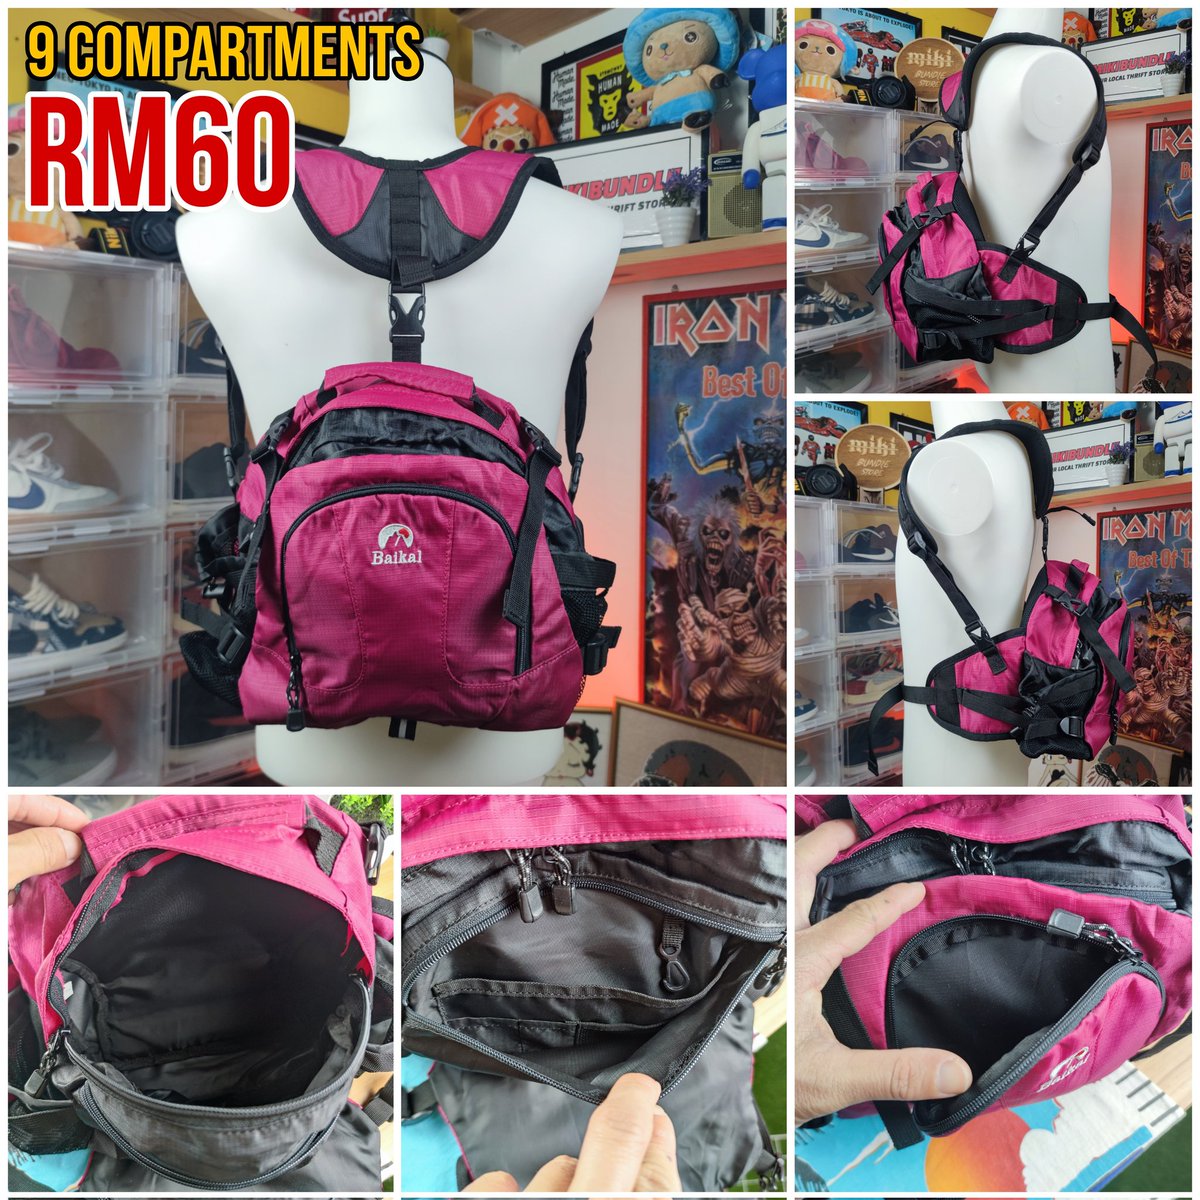 ‼️FOR SALE‼️

👜 BAIKAL OUTDOOR MULTIFUNCTIONAL BAG

💵 RM60 only! 

Size : Width 10.5 x Height 11'
Details : 9 compartments. Condition 9/10 ✨
**Authentic original item 💯

#baikal #baikalpouchbag #baikalbag #baikalbundle #baikalmalaysia #baikaloriginal #slingbag #hikingbag